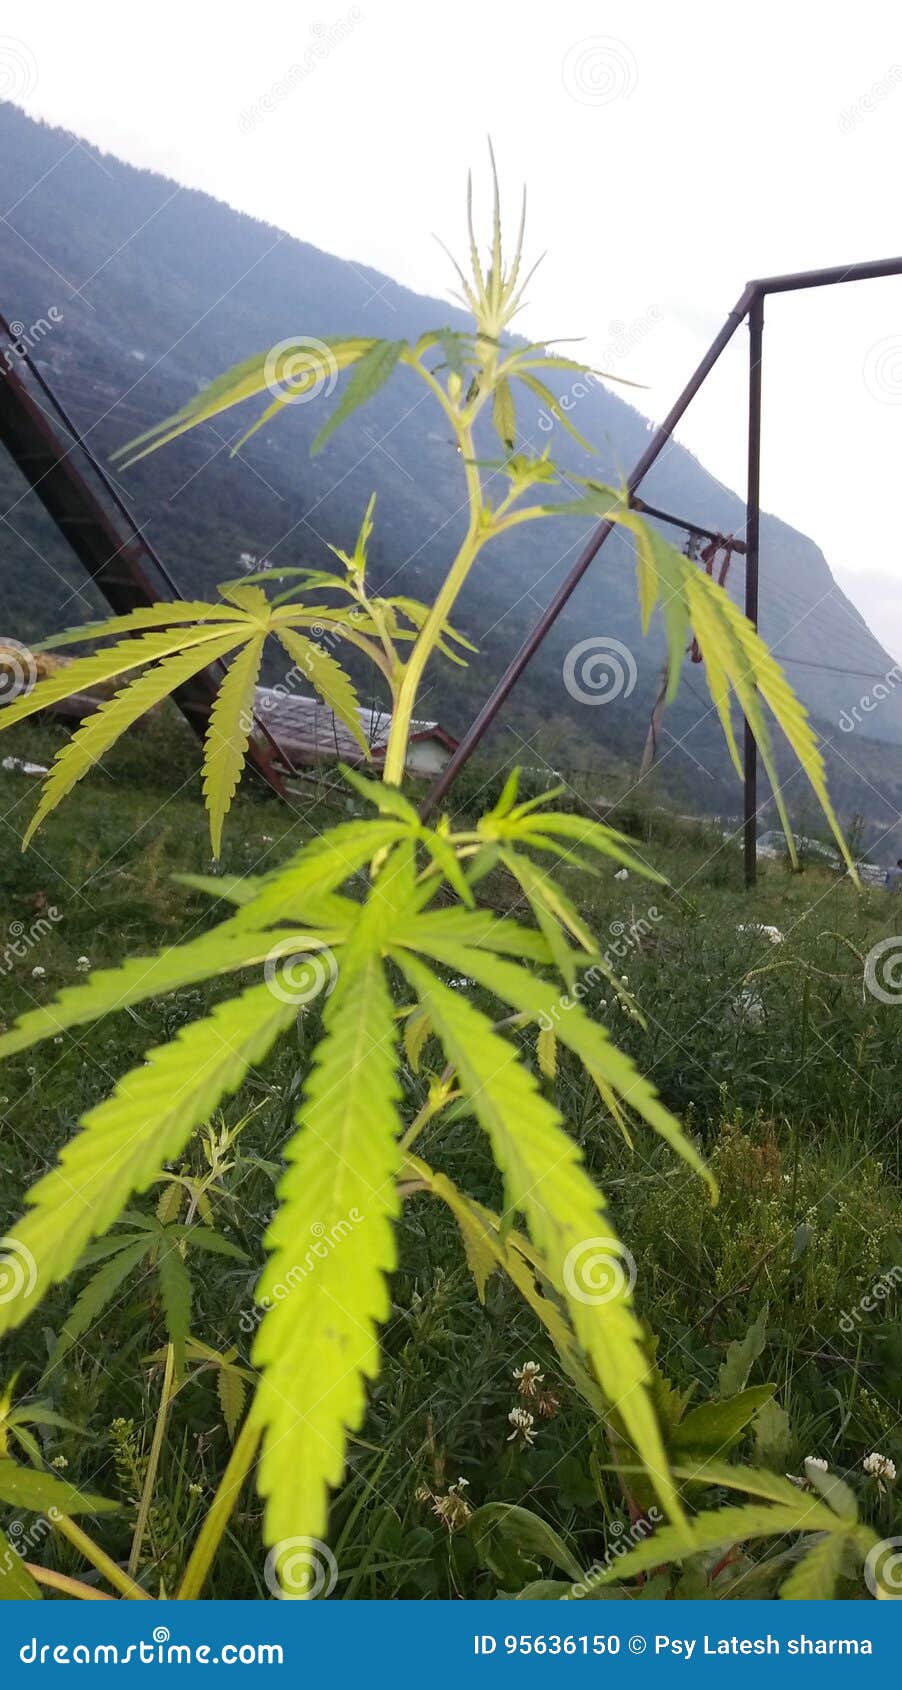 Mlana weed plant stock photo. Image of power, boom, plant - 95636150